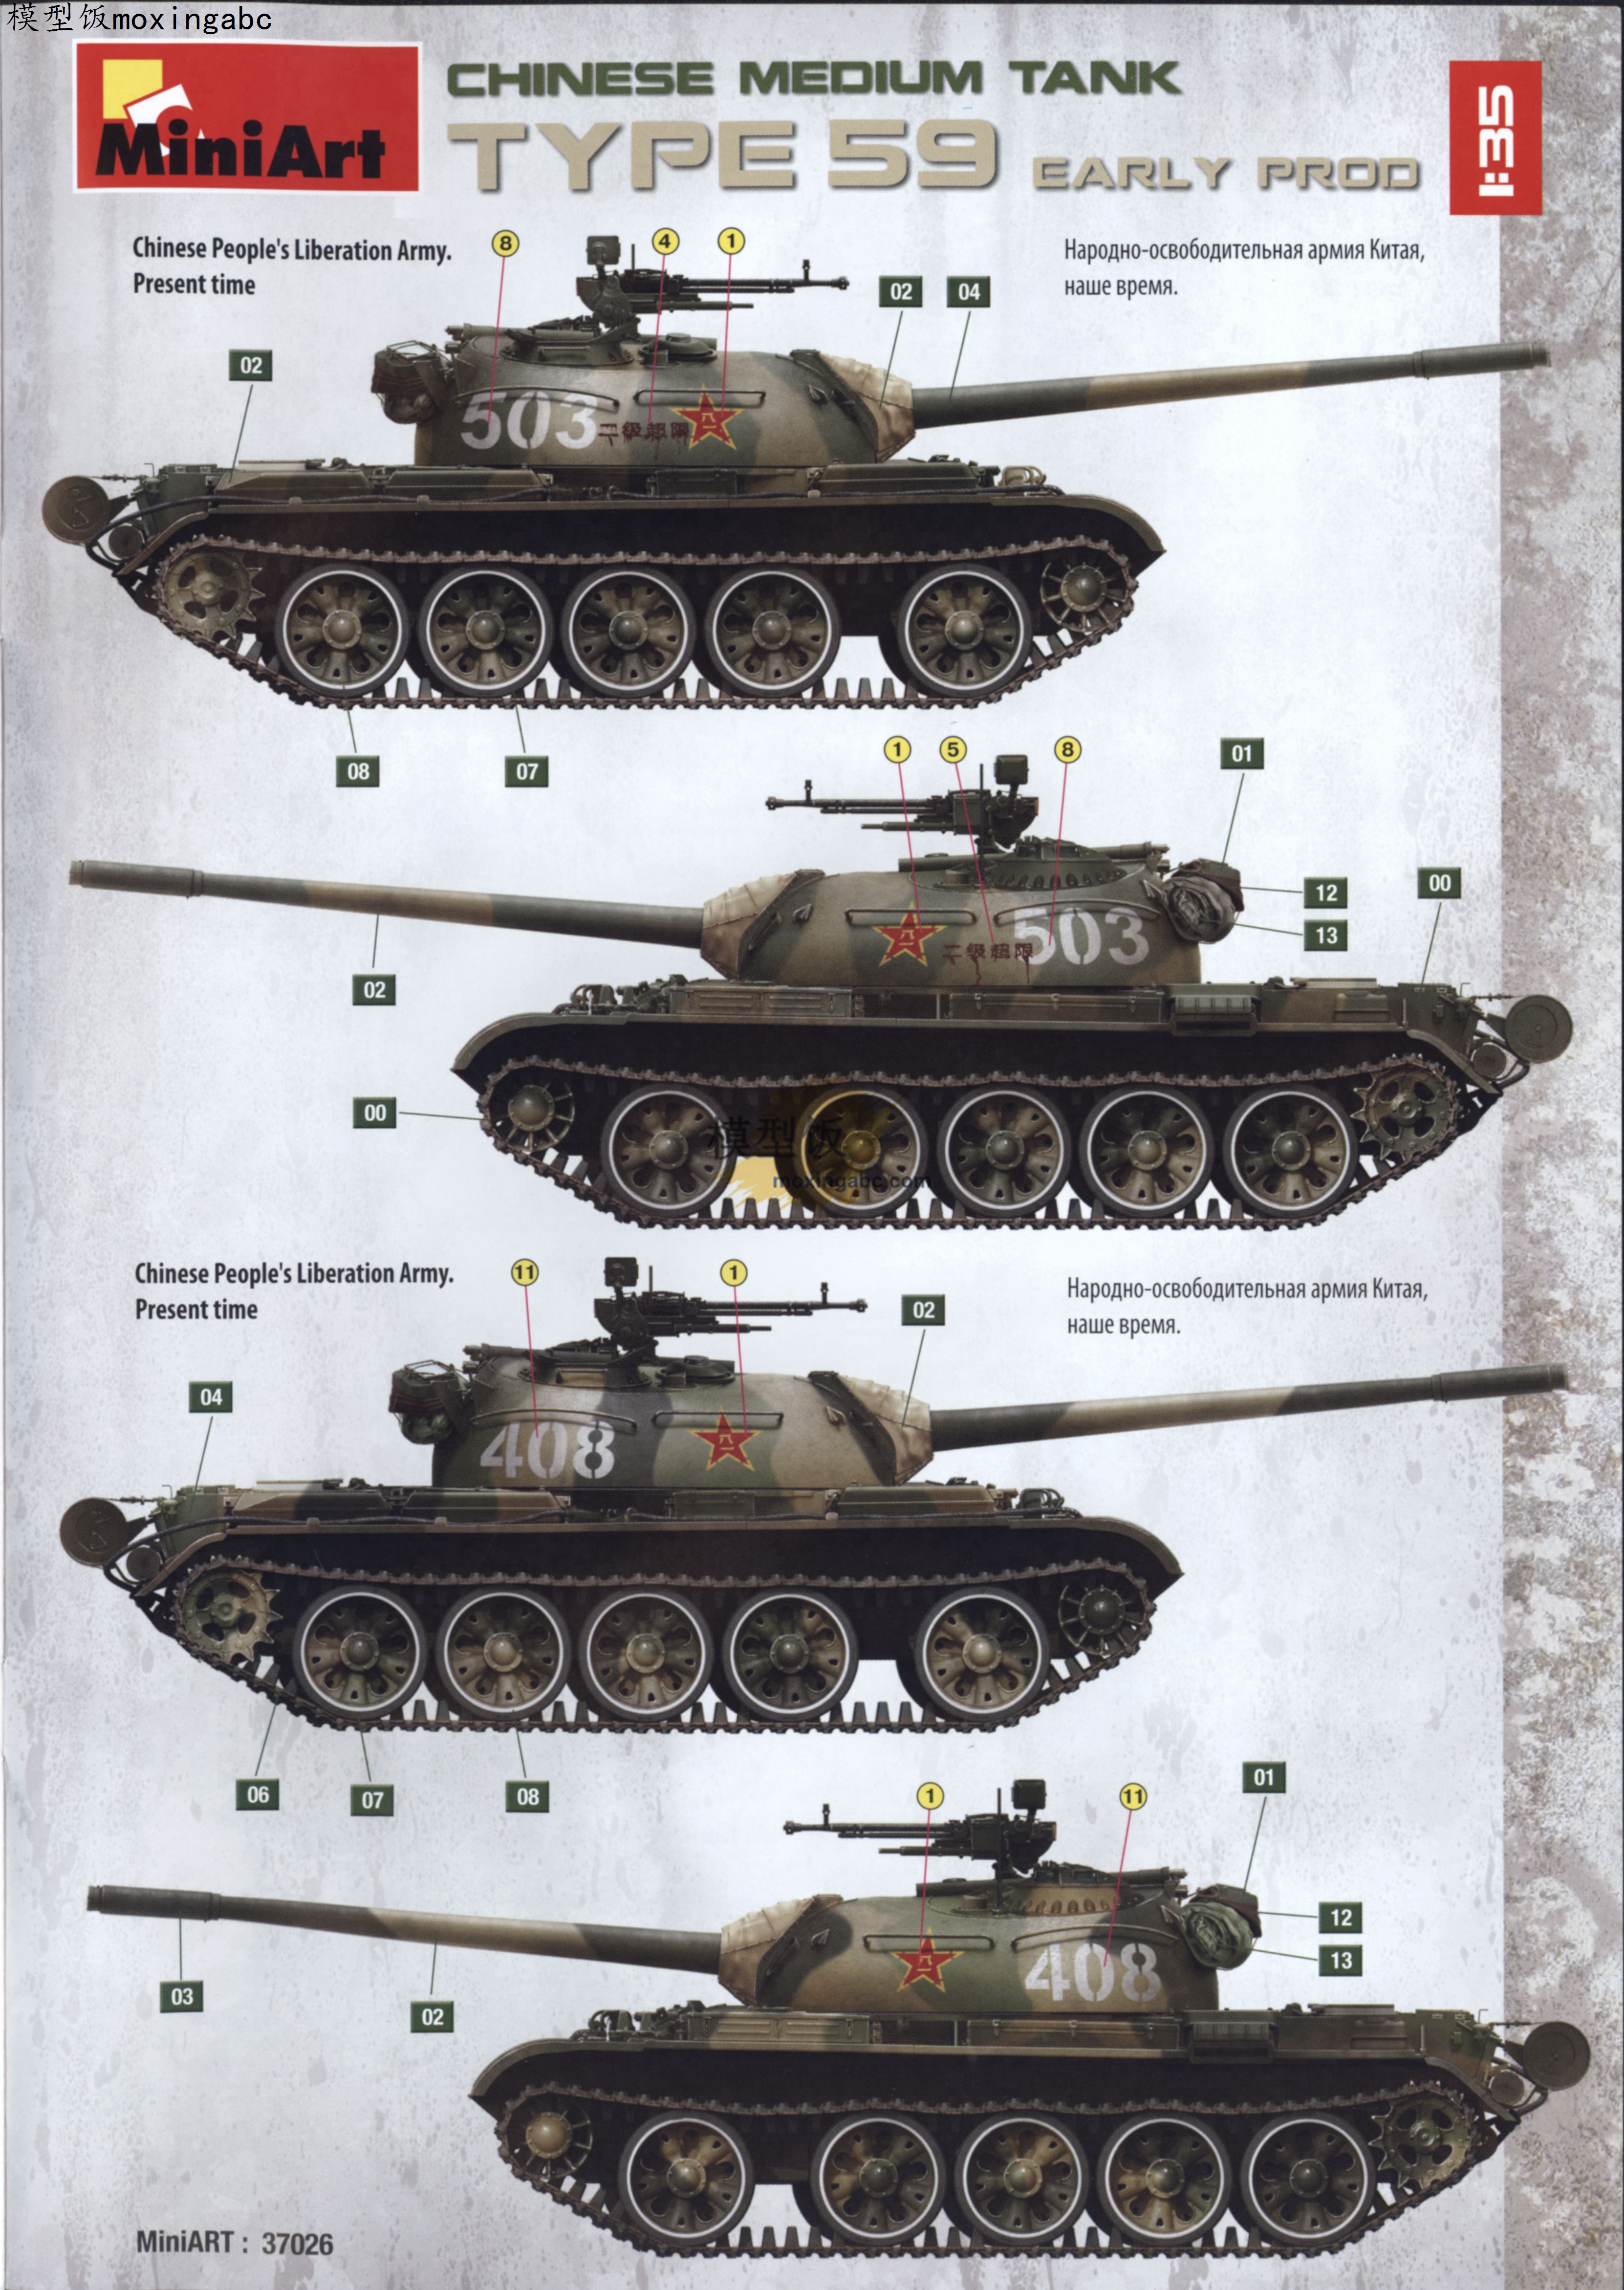 miniart 37026 中国59式中型坦克早期生产型 说明书